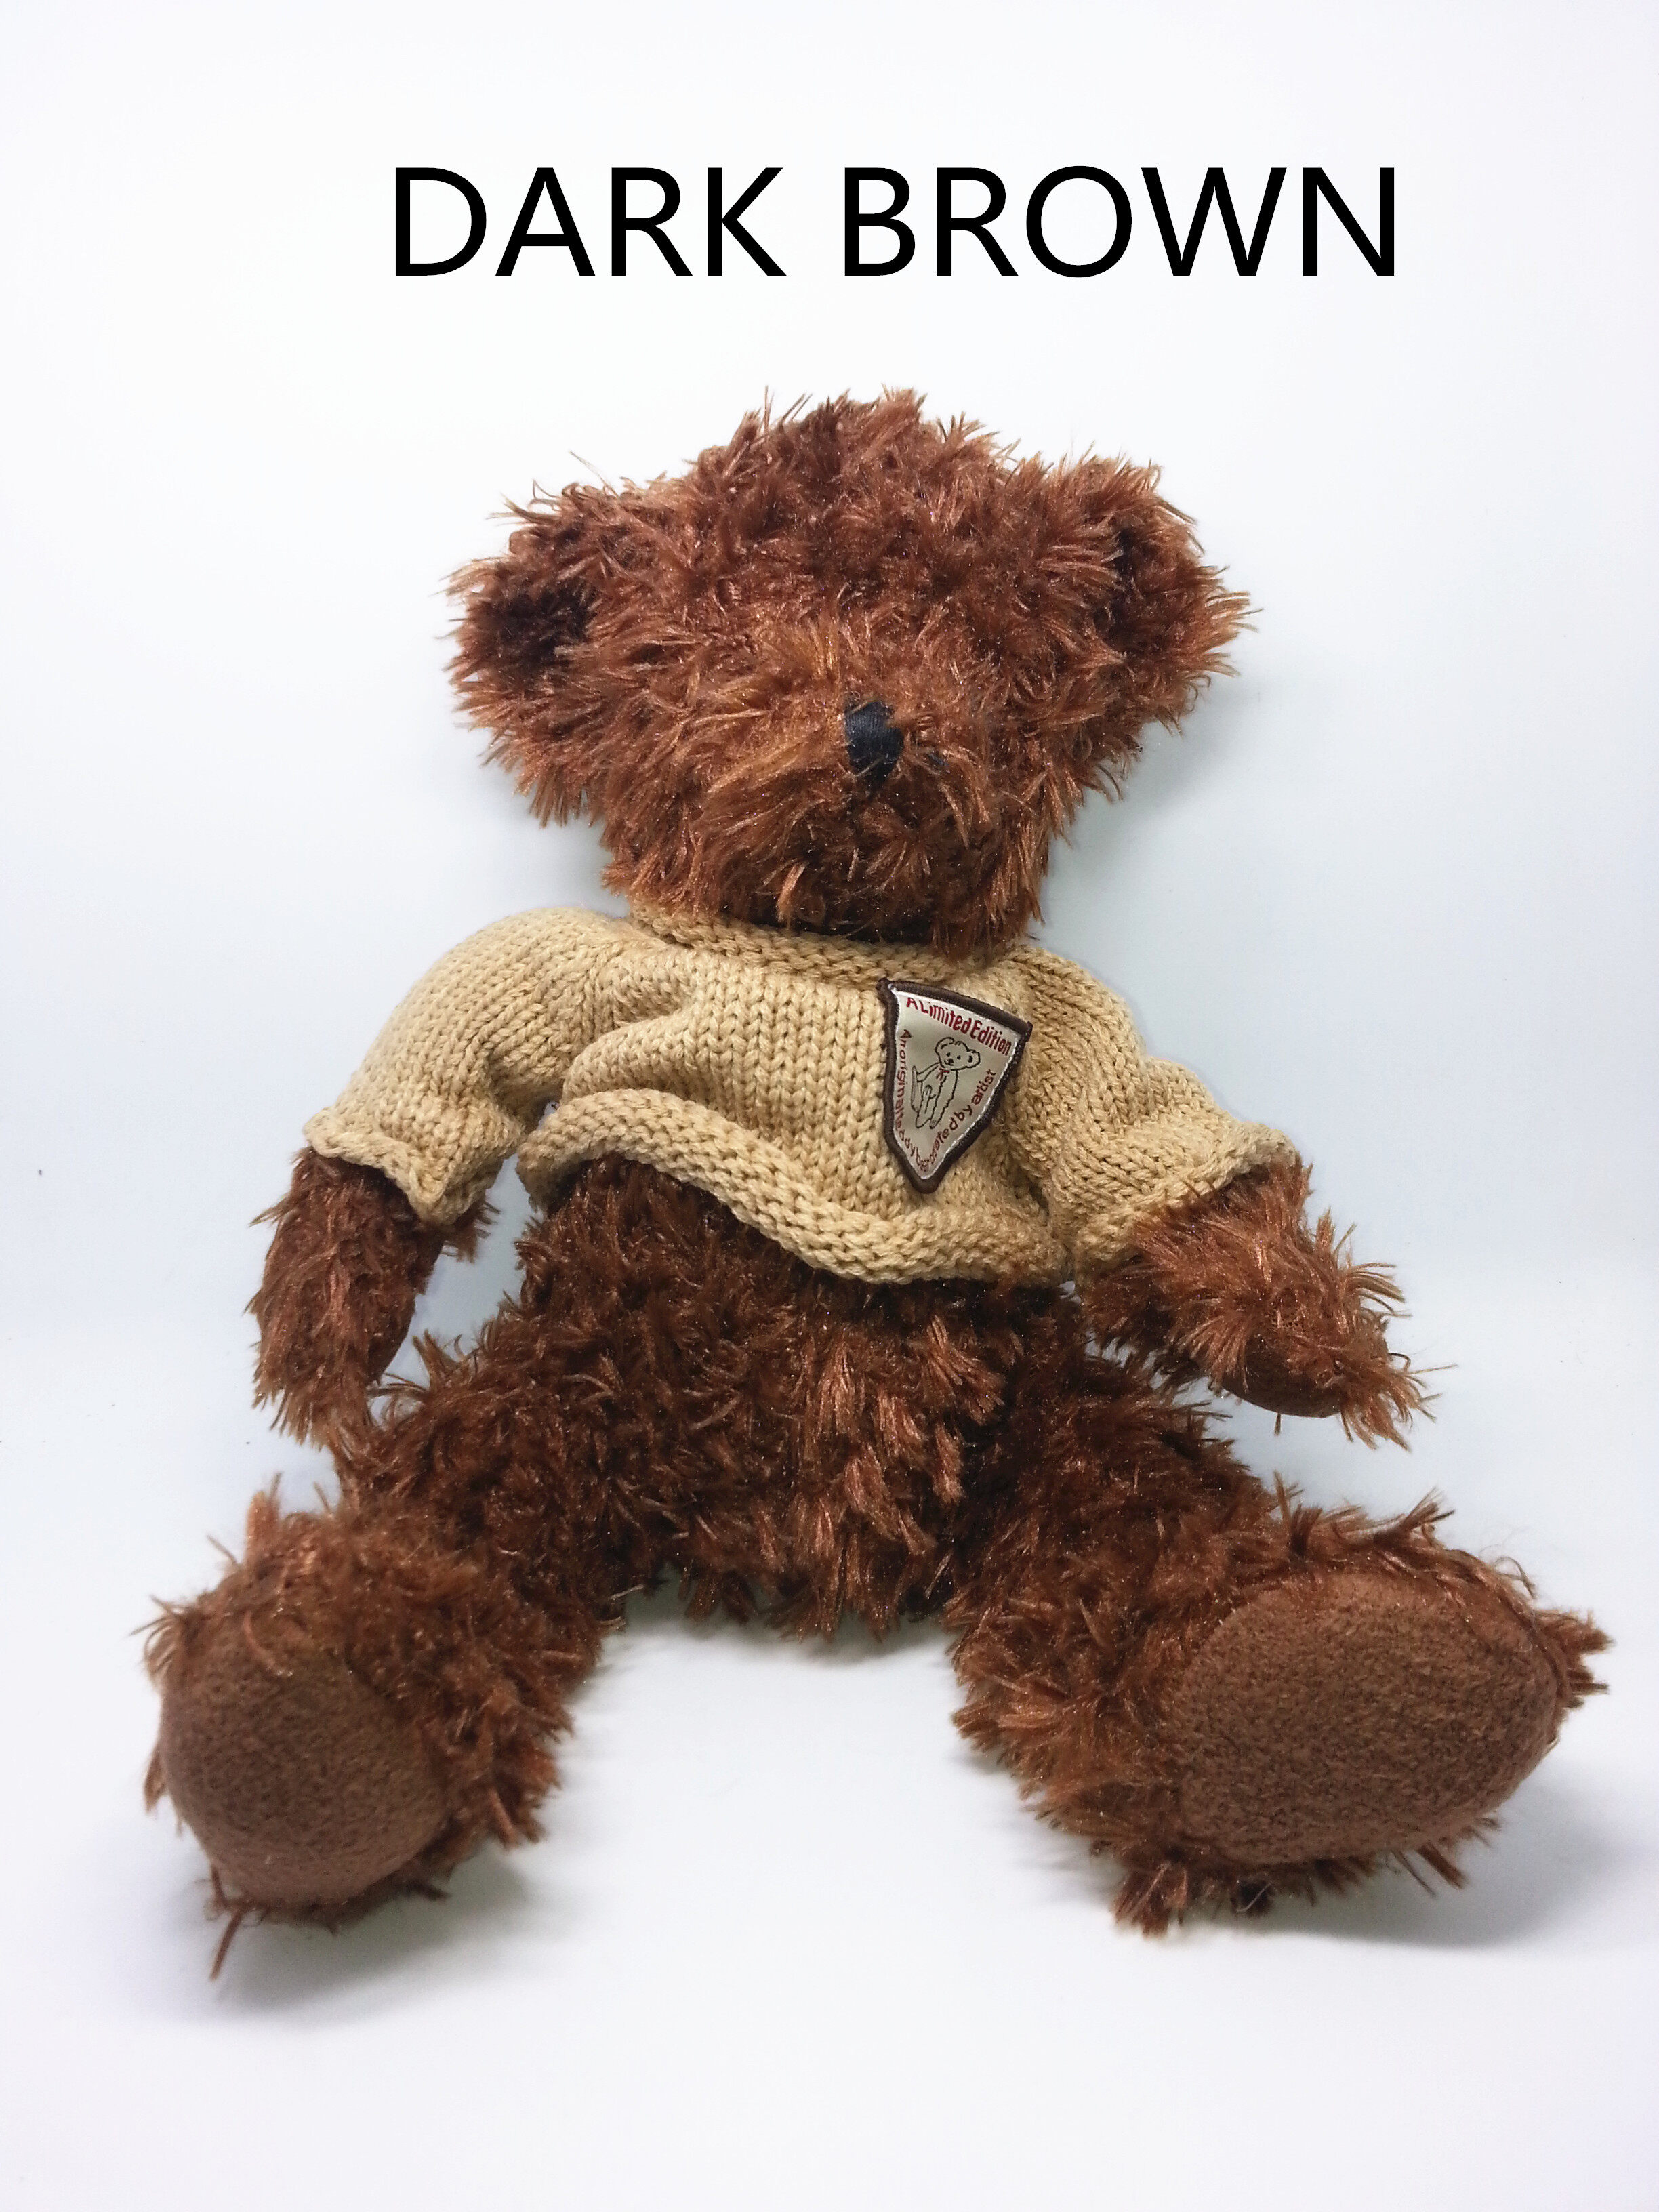 AFGY FGO 061 OIX Assorted Teddy Bear (Dark Brown with Shirt) toys for girls